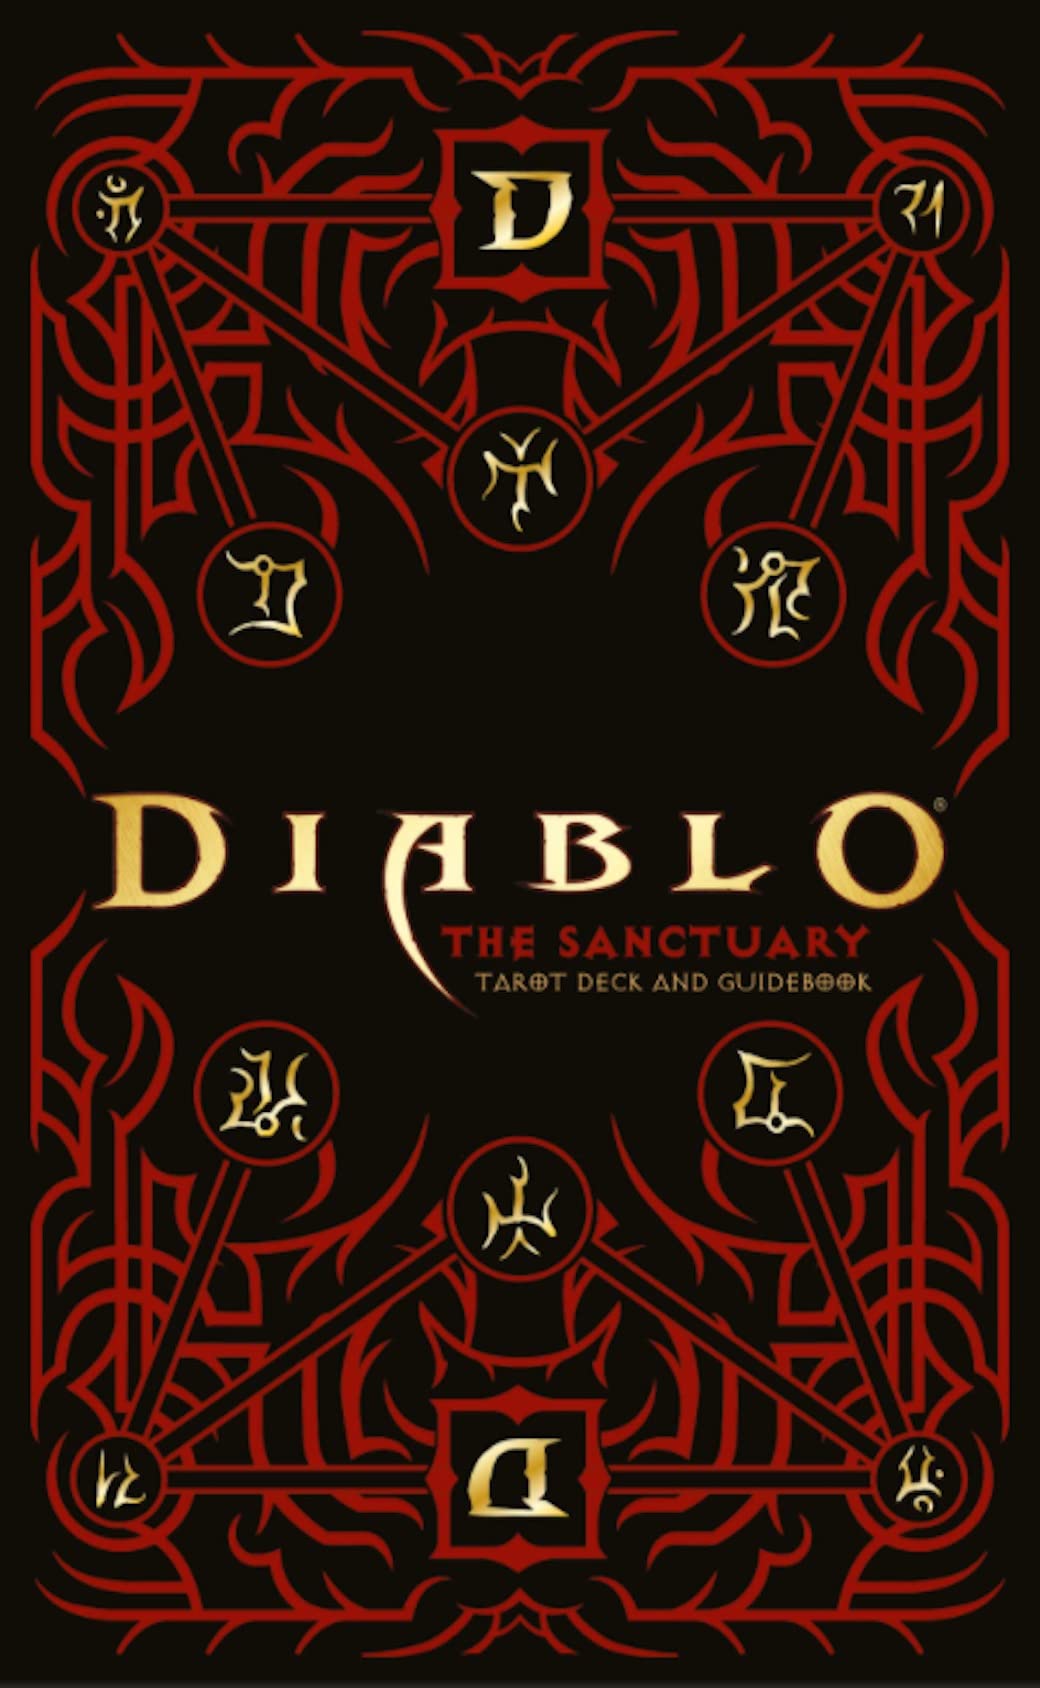 Diablo: The Sanctuary Tarot Deck and Guidebook (Cards)